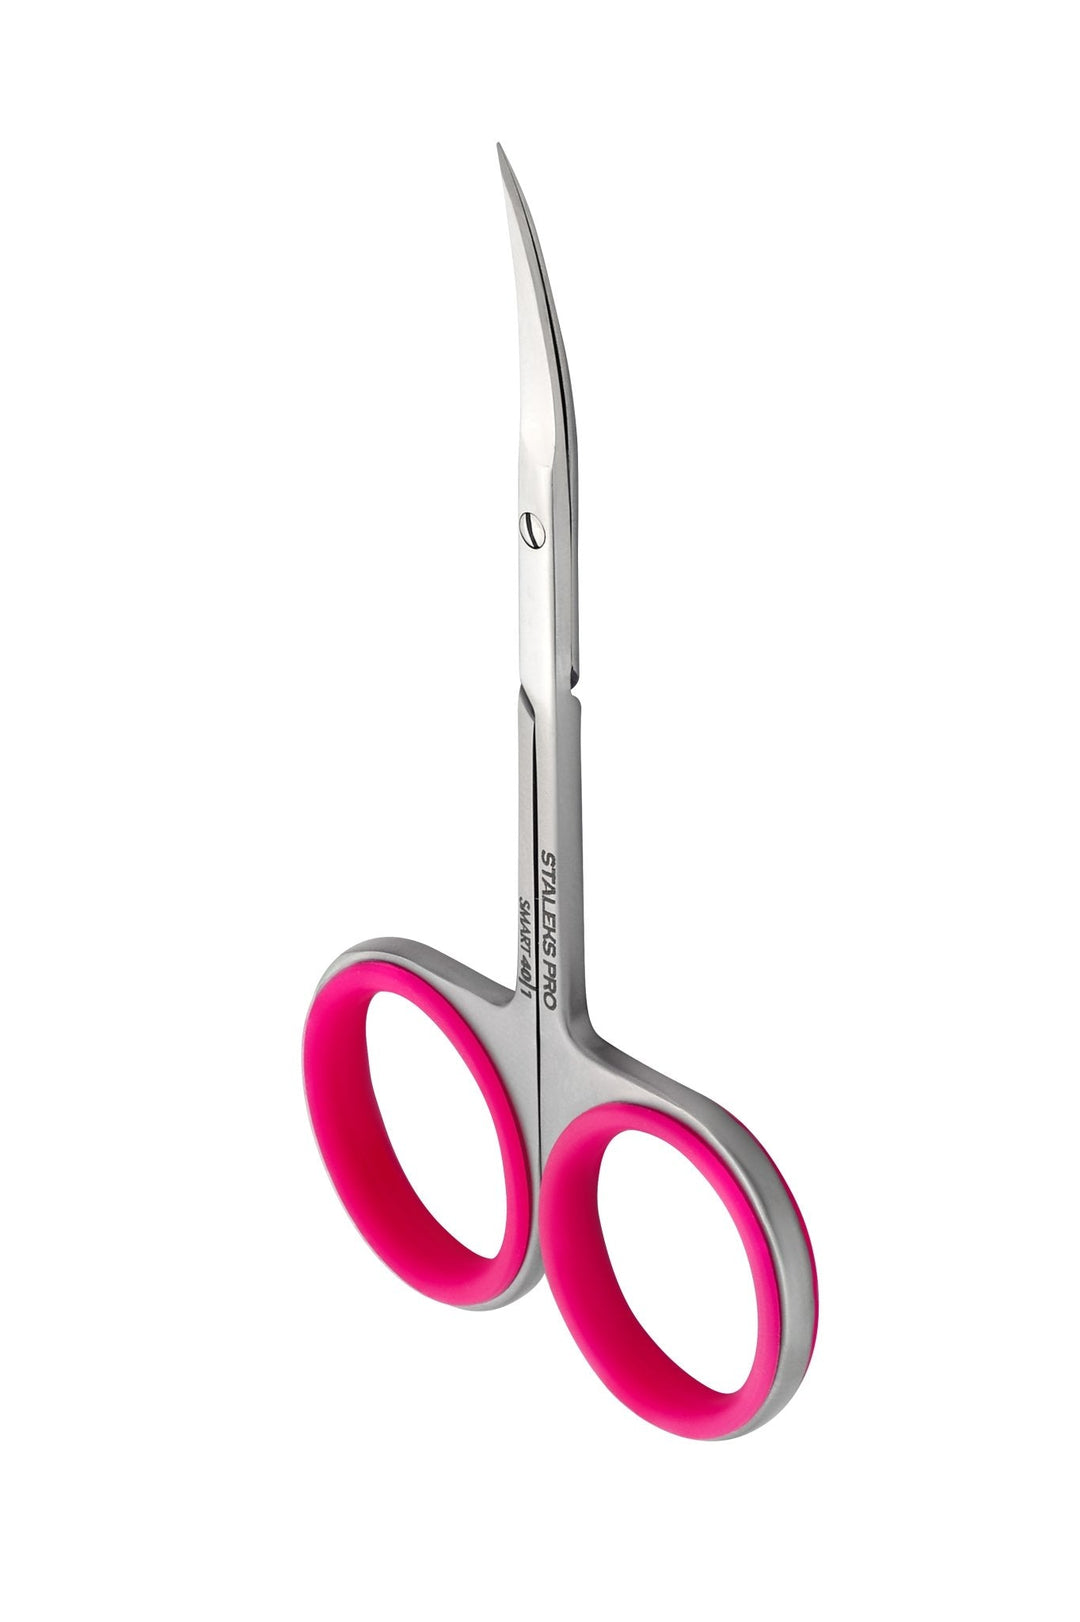 Staleks Pro Cuticle Scissors Smart 40 Type 3 — 24 mm blades | U-tools